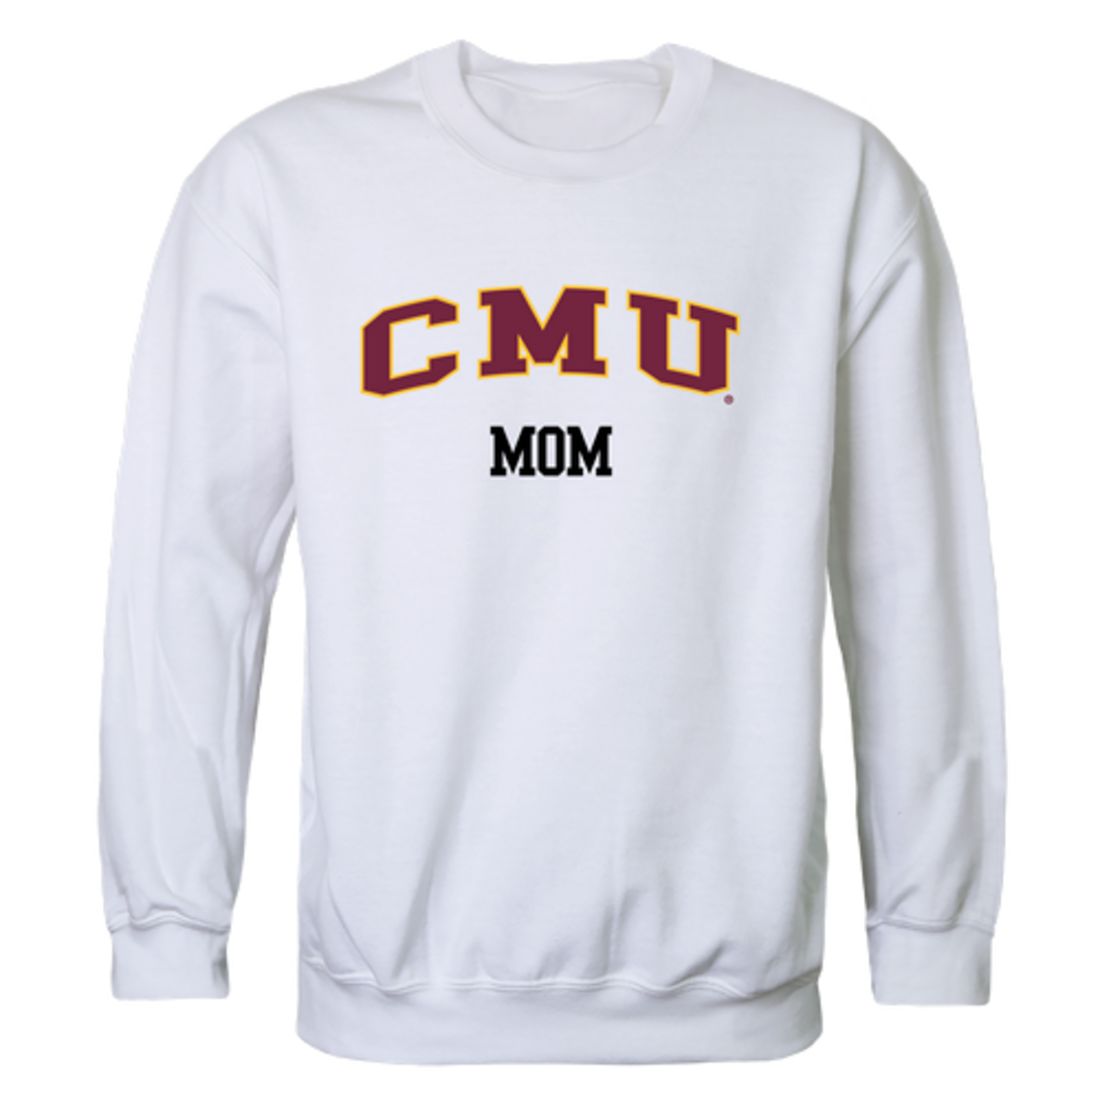 CMU Central Michigan University Chippewas Mom Crewneck Sweatshirt